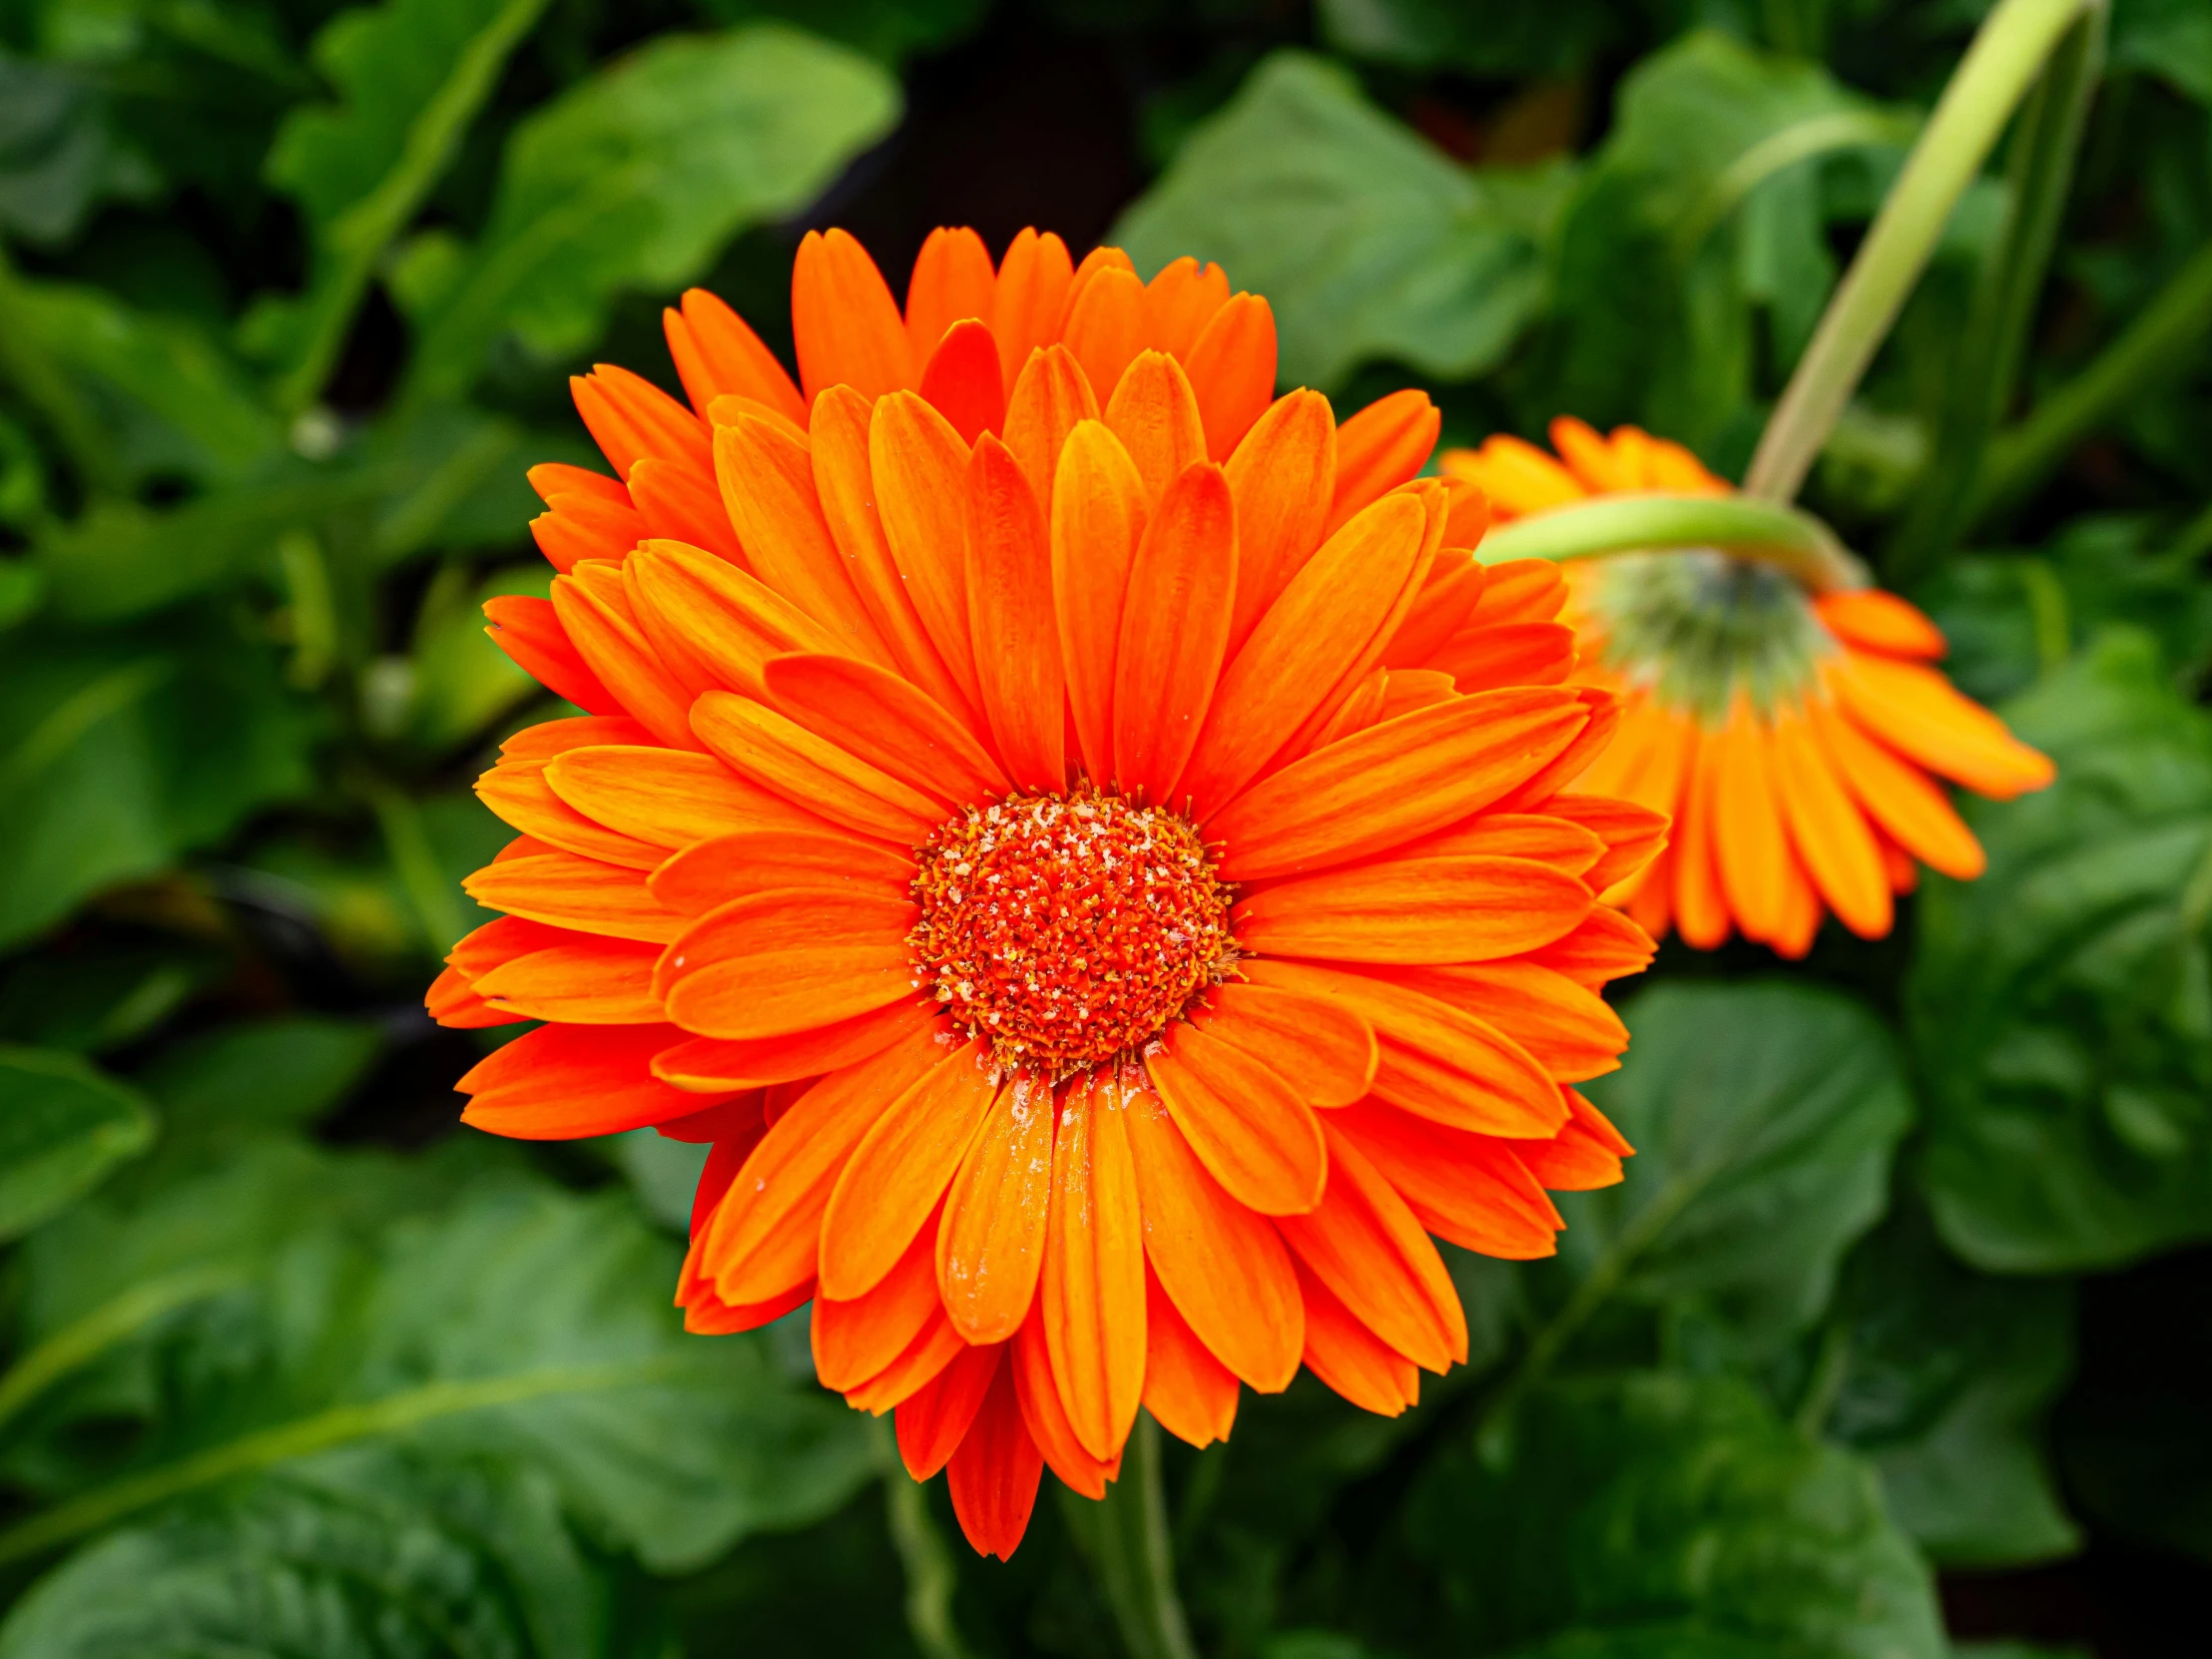 an orange flower with dew drops on it